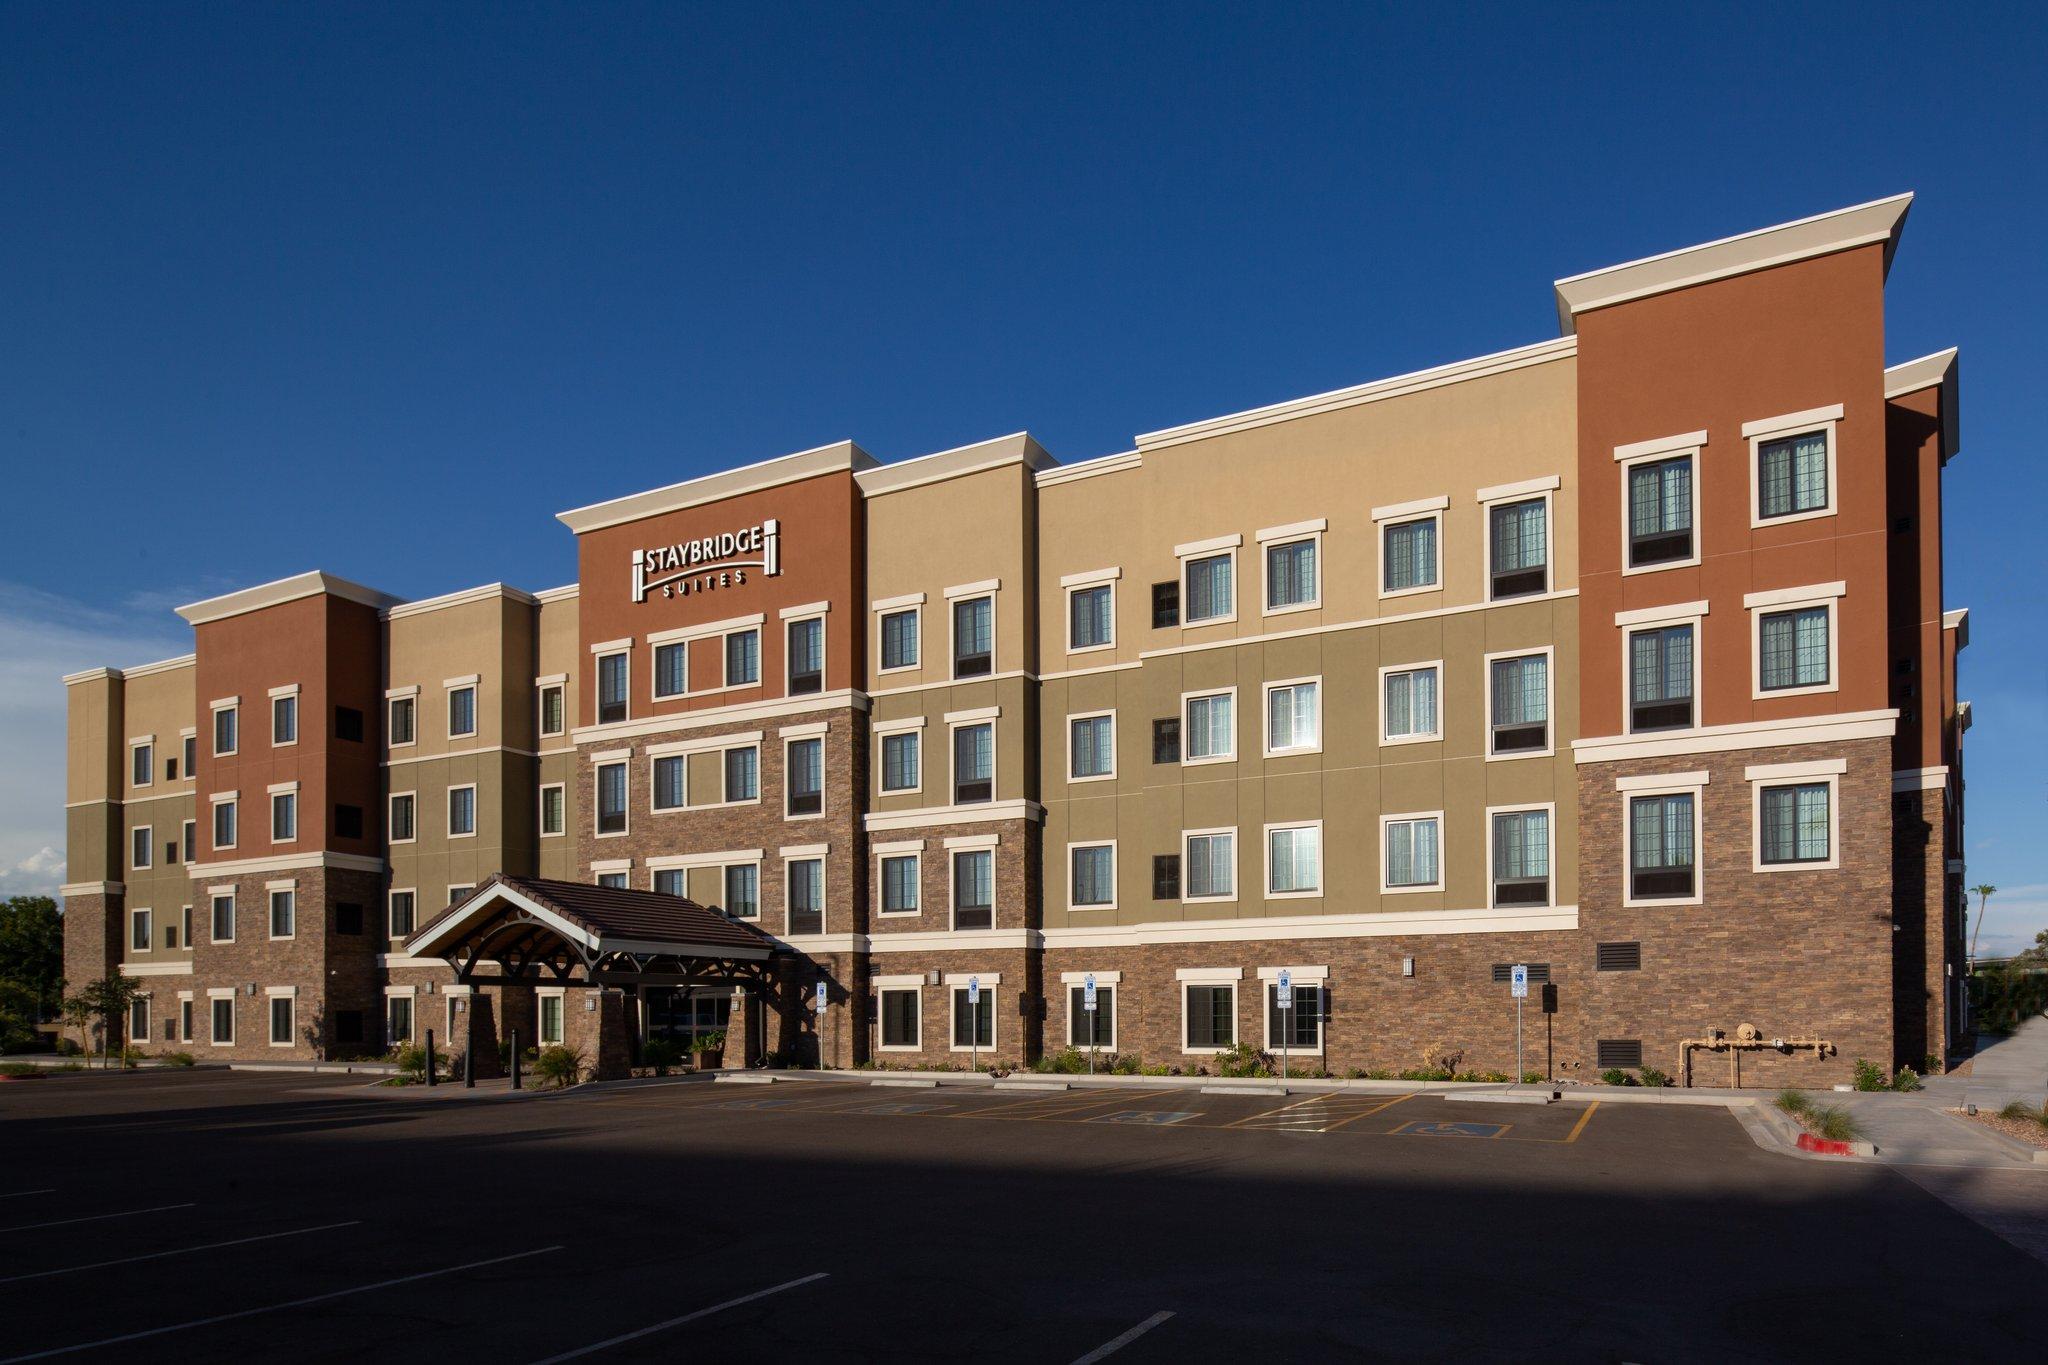 Staybridge Suites Phoenix – Biltmore Area in Phoenix, AZ